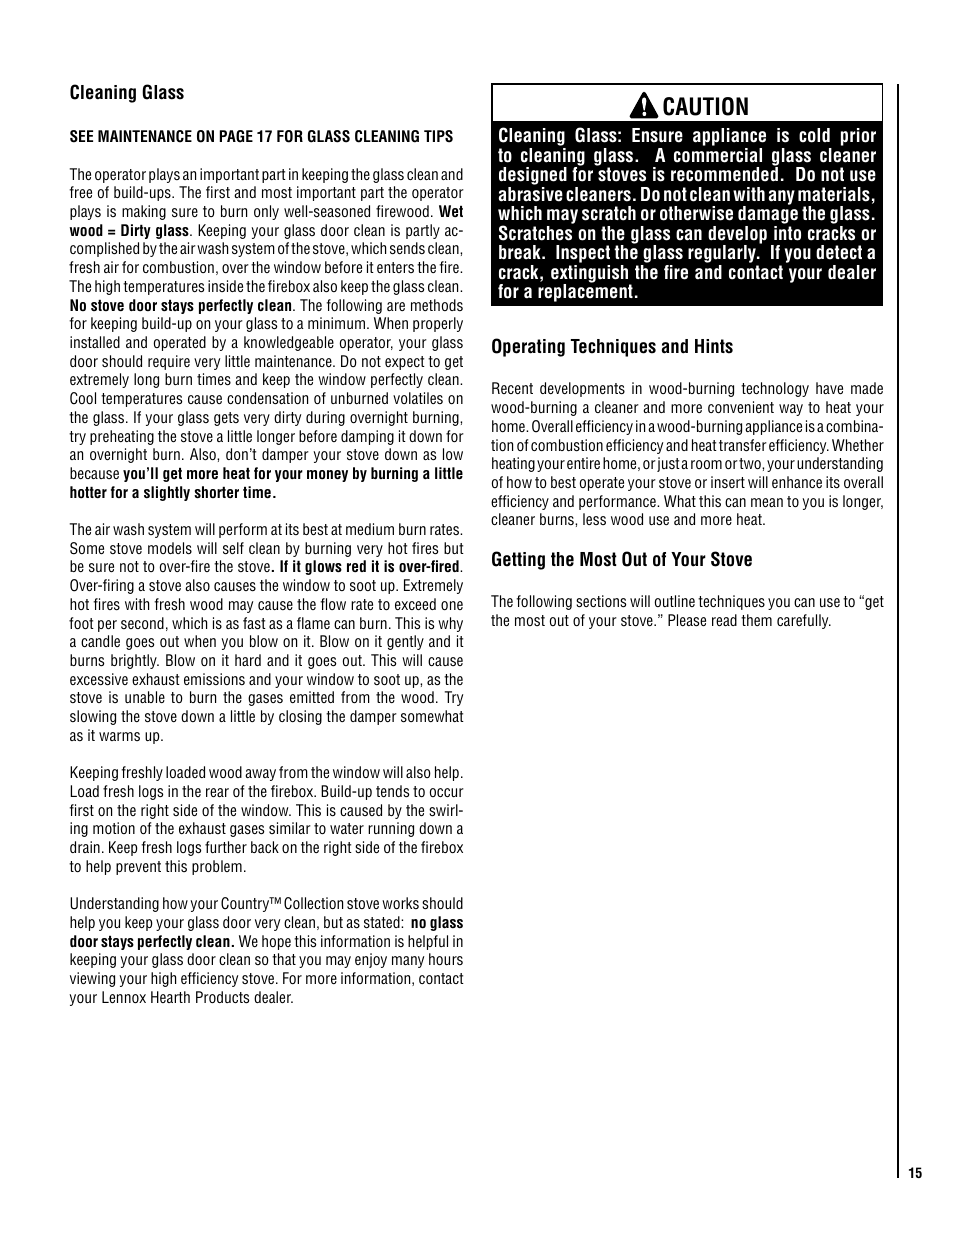 Caution | LG MODEL STRIKER S160 User Manual | Page 15 / 22